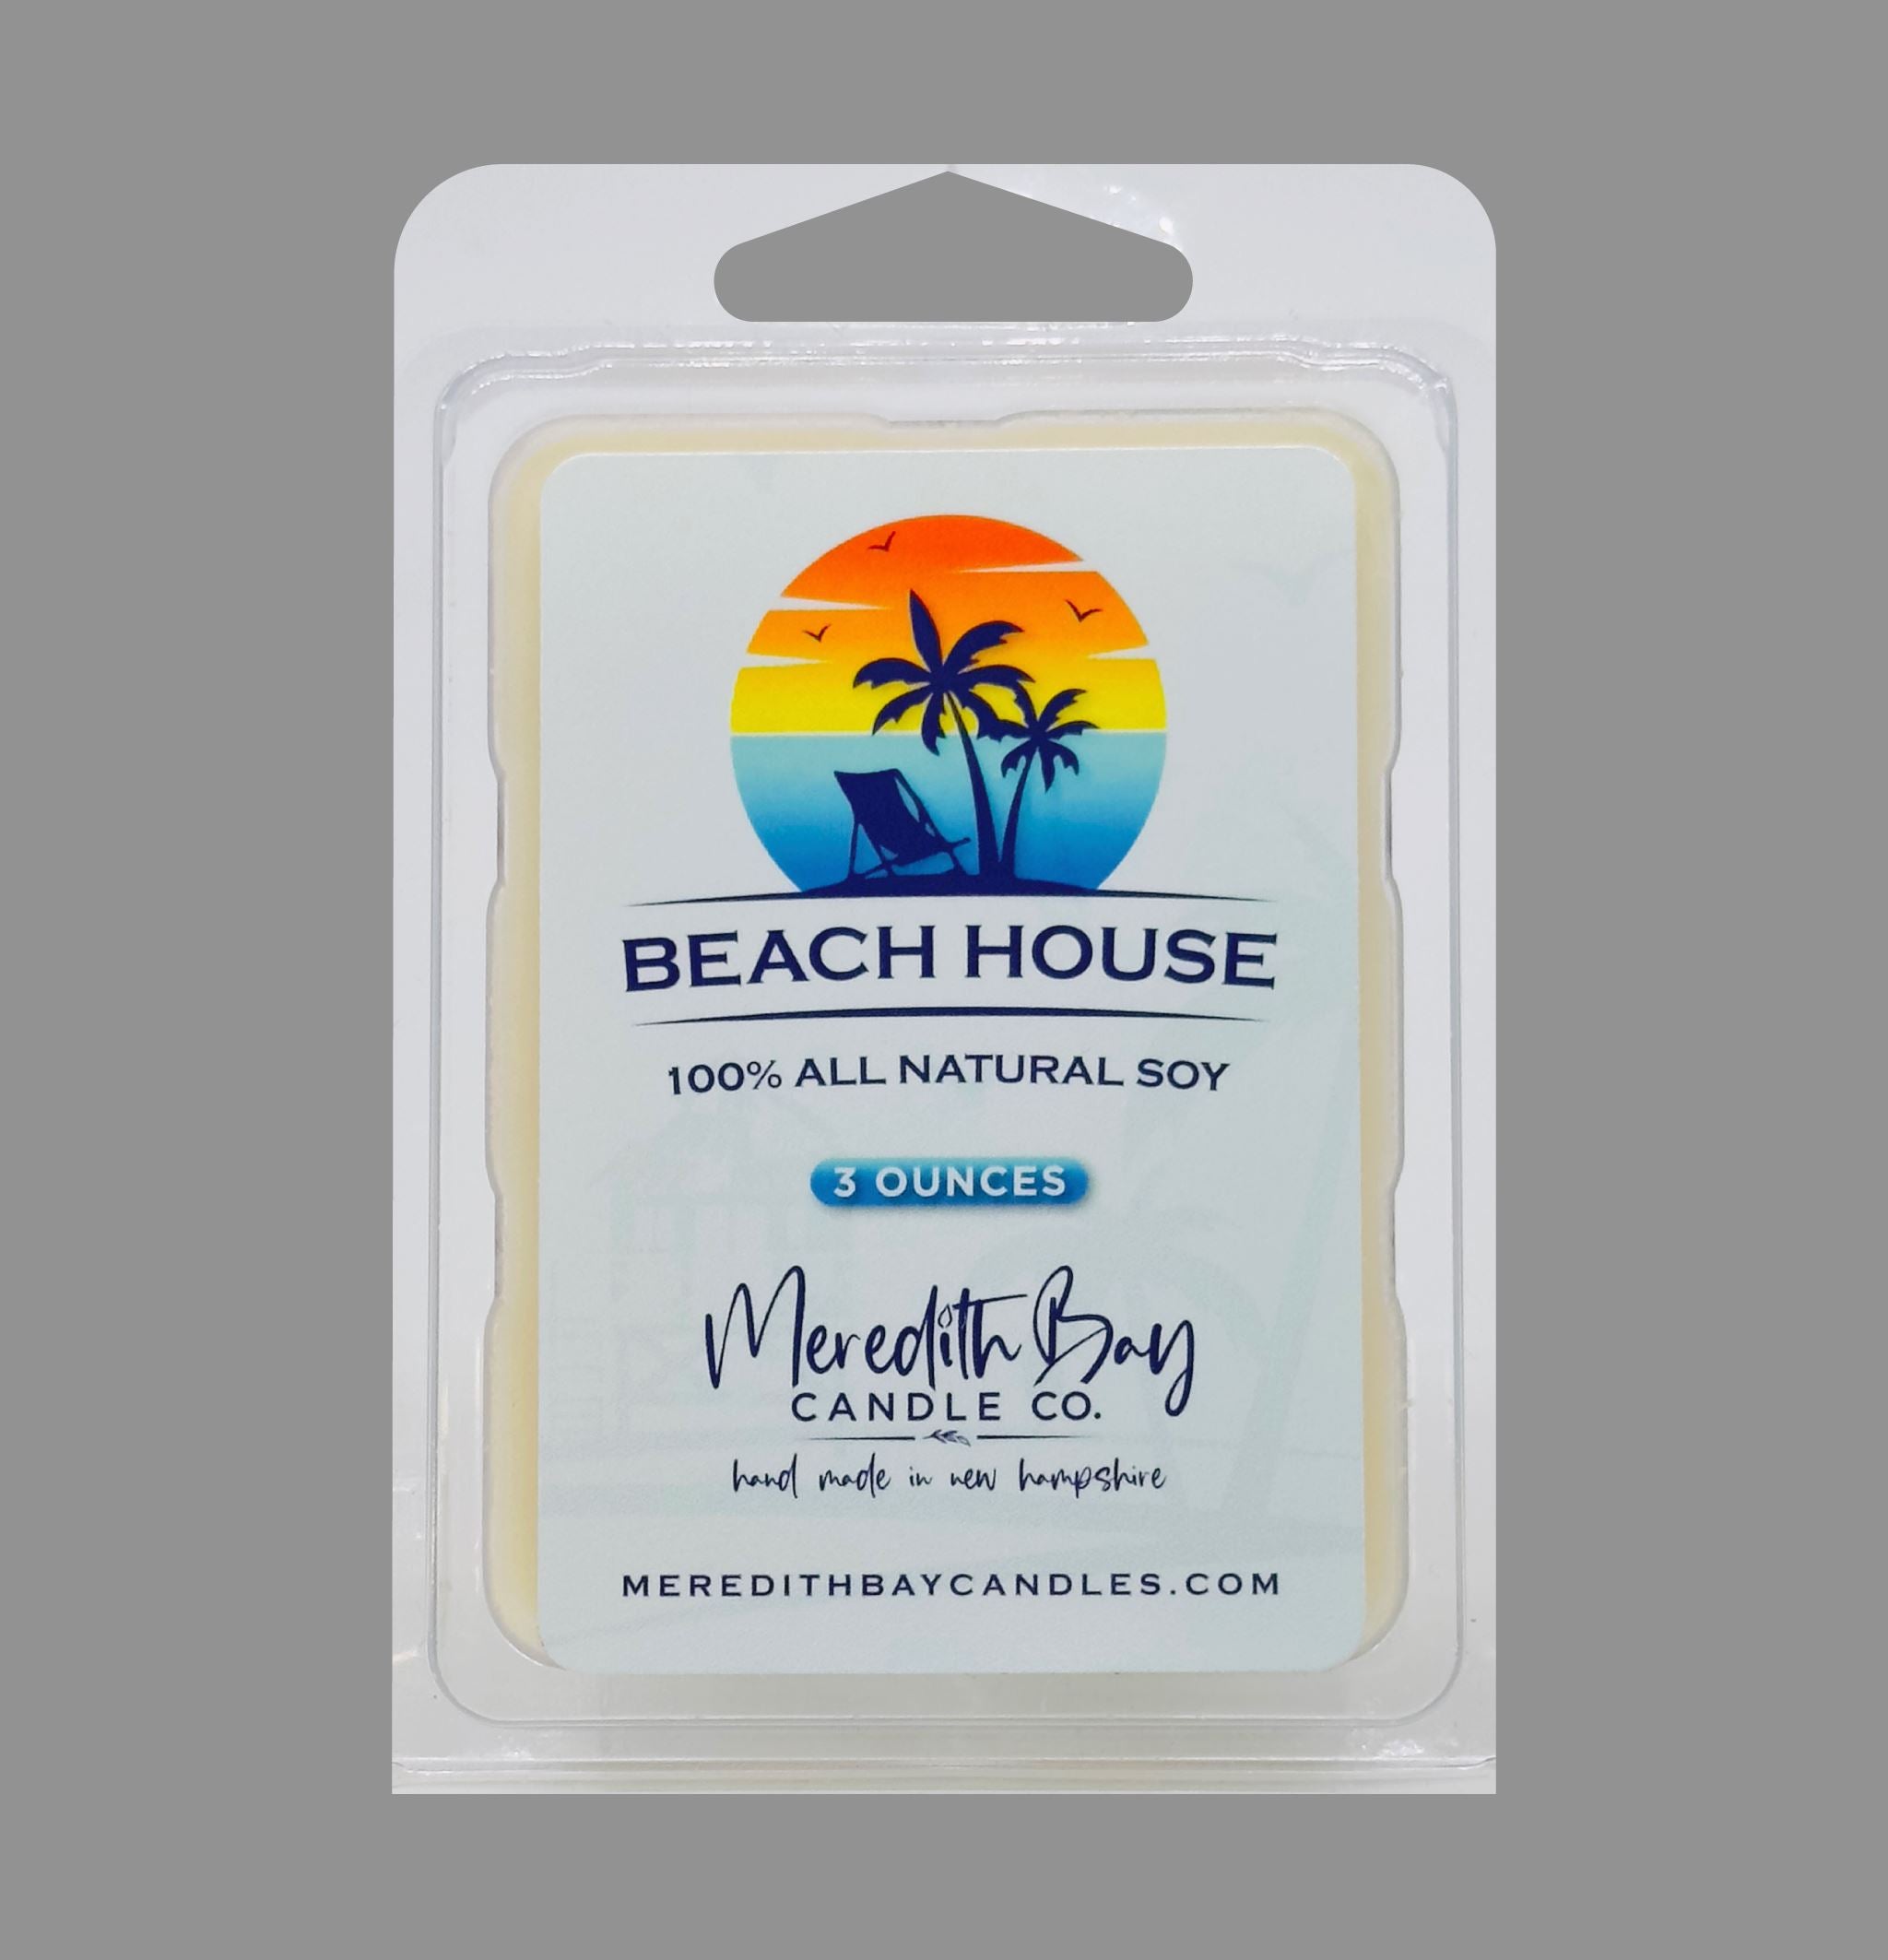 Beach House Wax Melt Wax Melt Meredith Bay Candle Co 